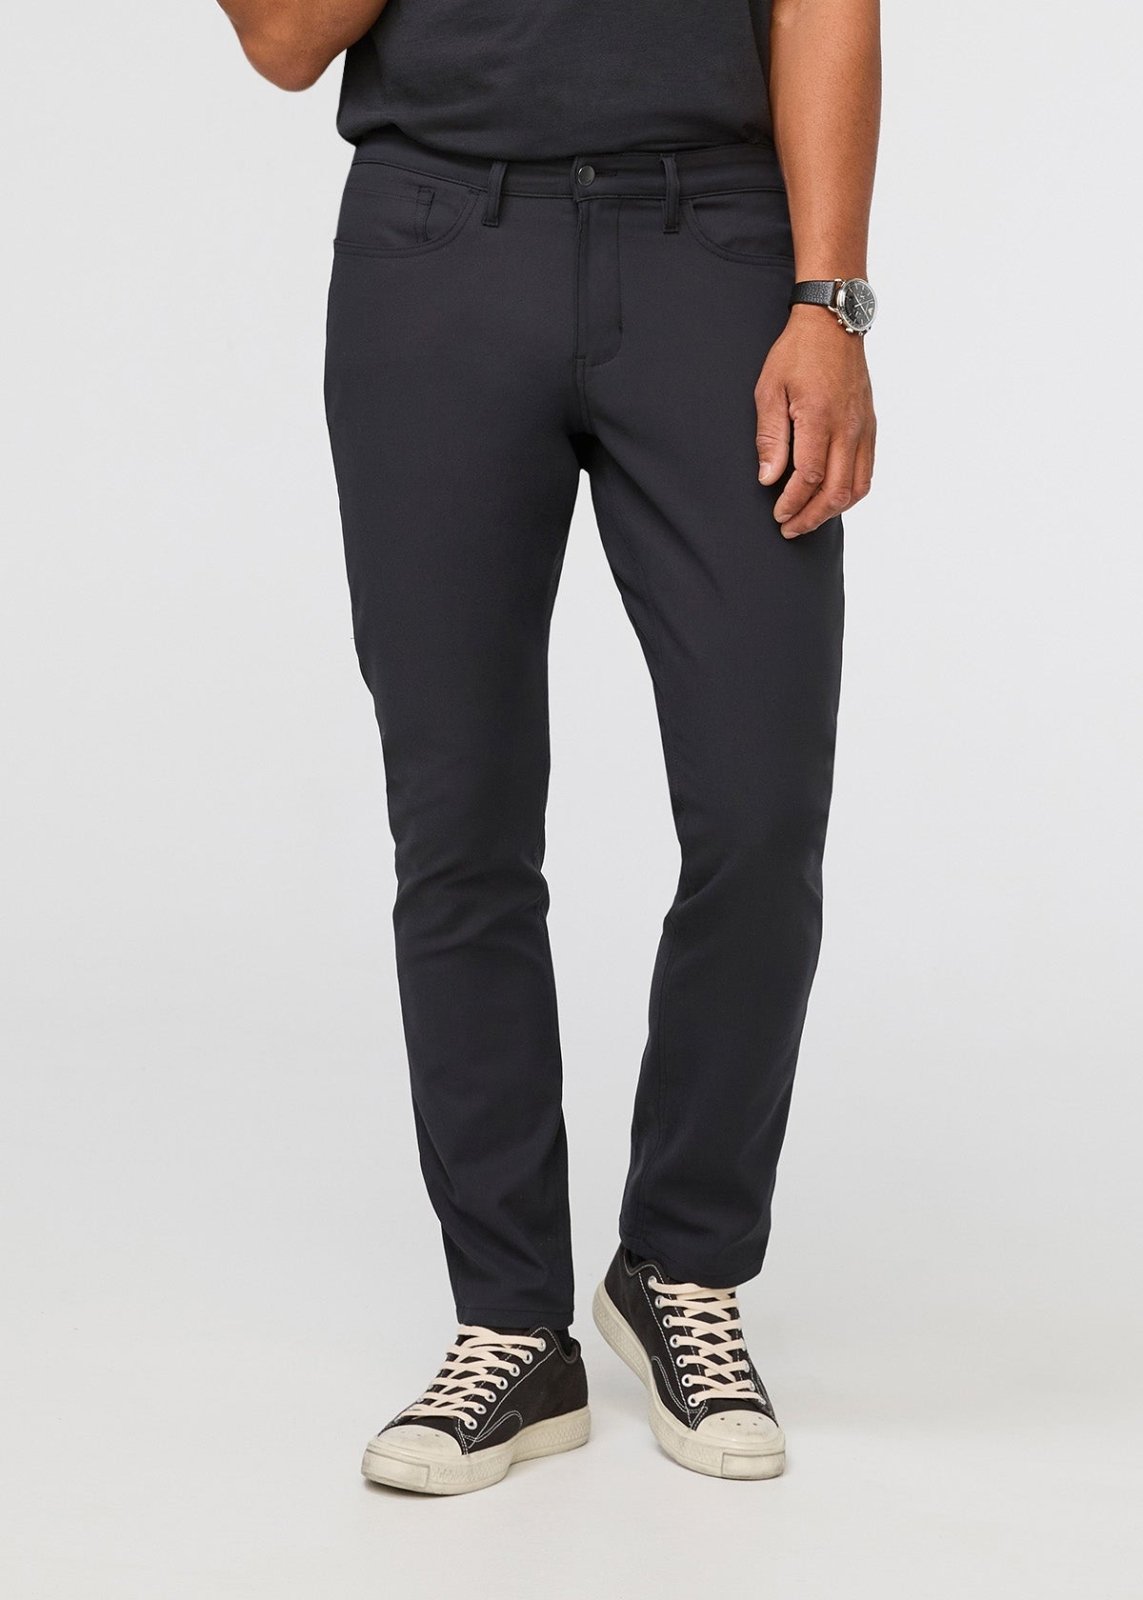 LULULEMON Athletica Pants Black Stretch Back Zip Pocket Size 8